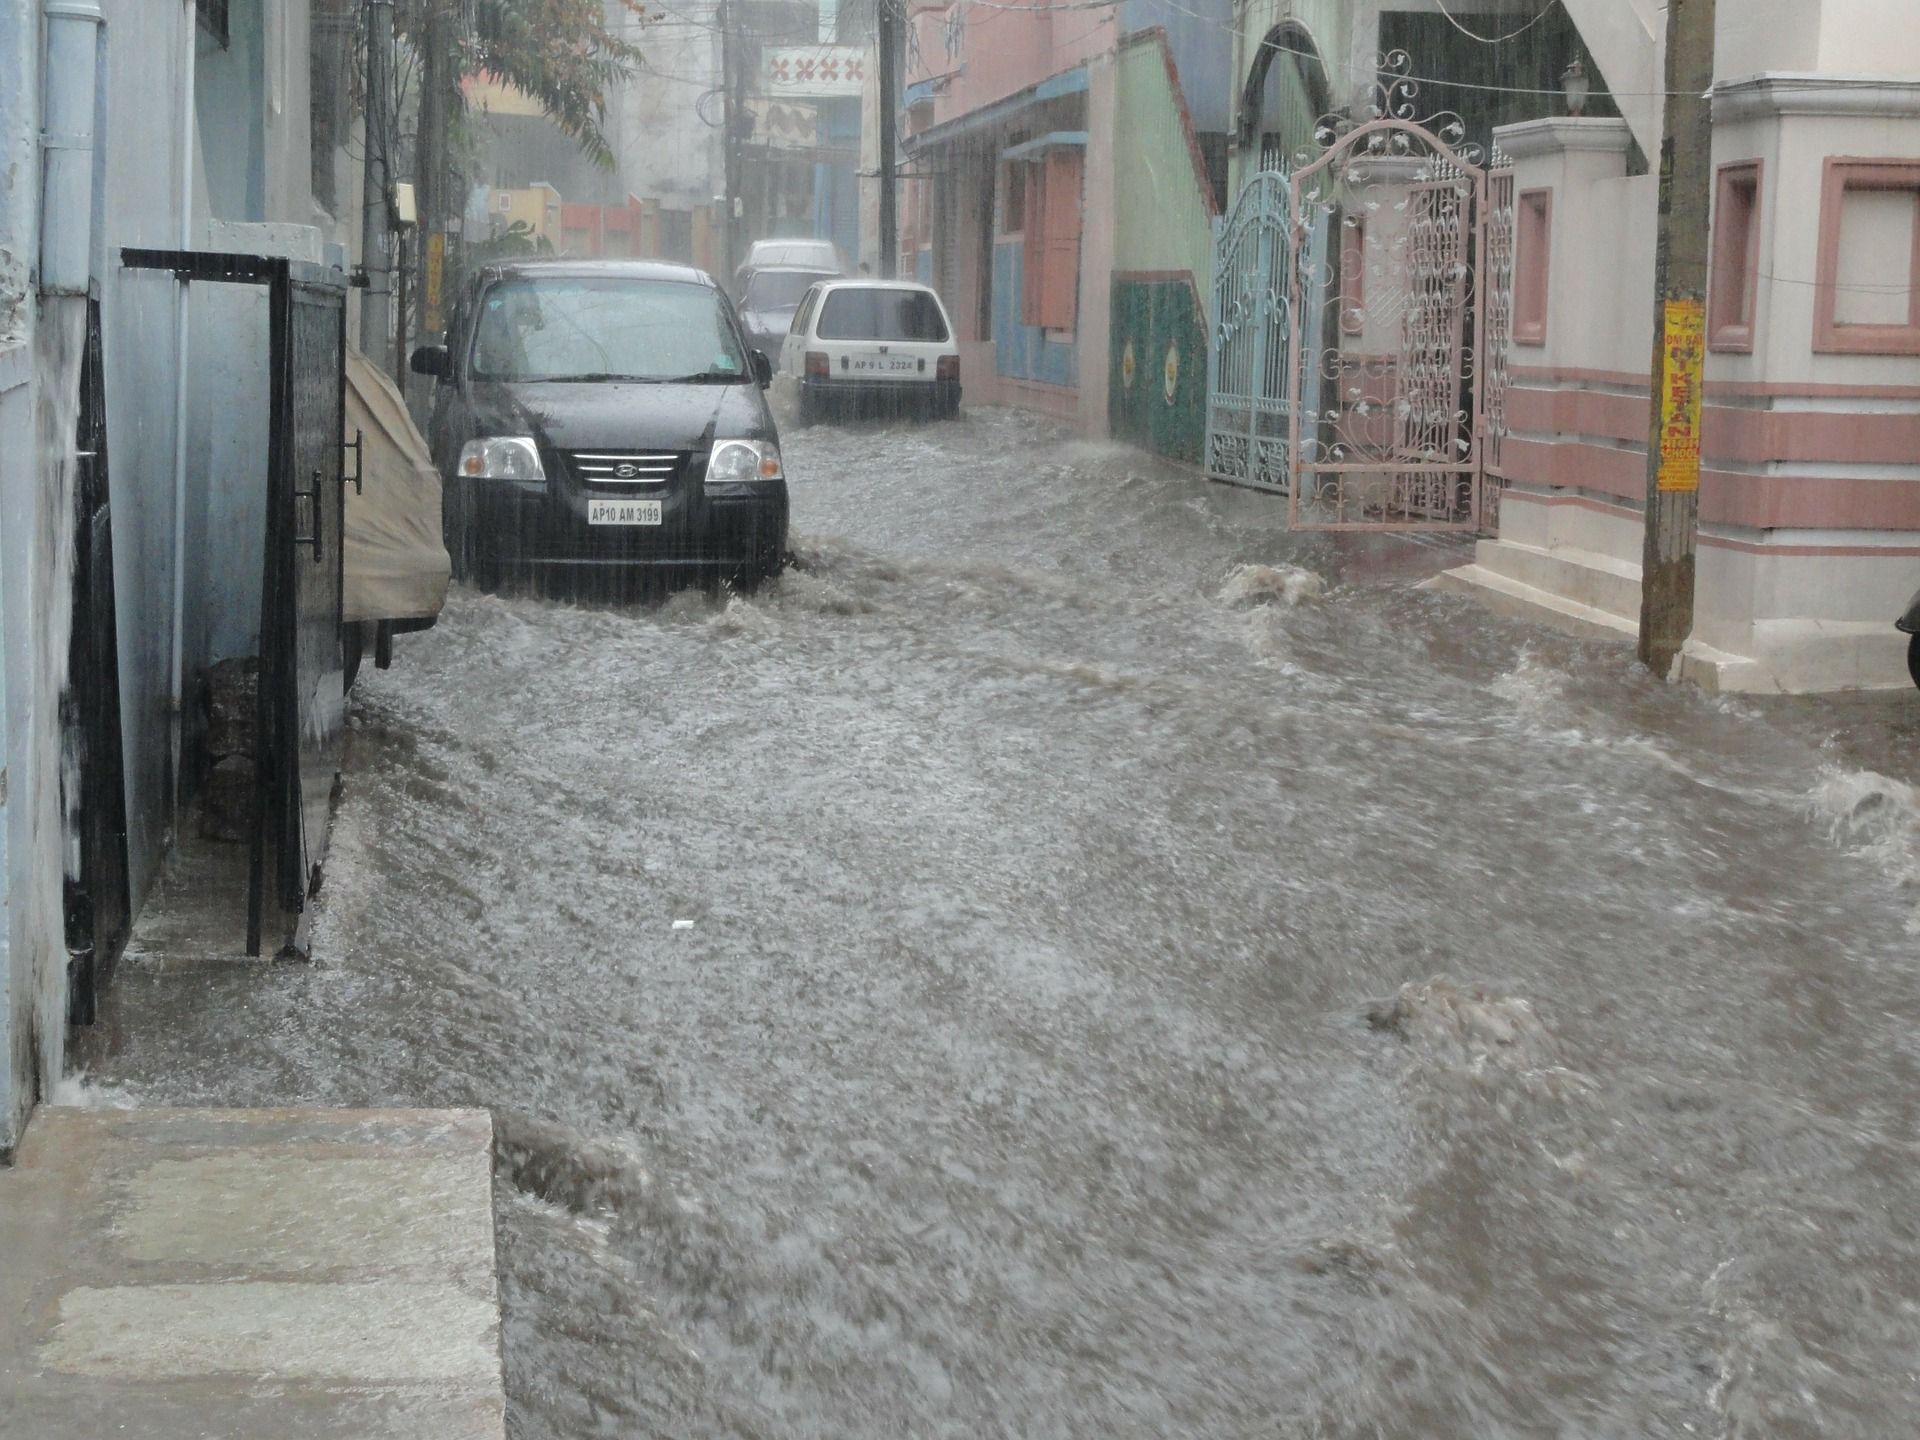 Inundación que podría estar causada por la crisis climática / Foto: Joseph Thomas - Pixabay